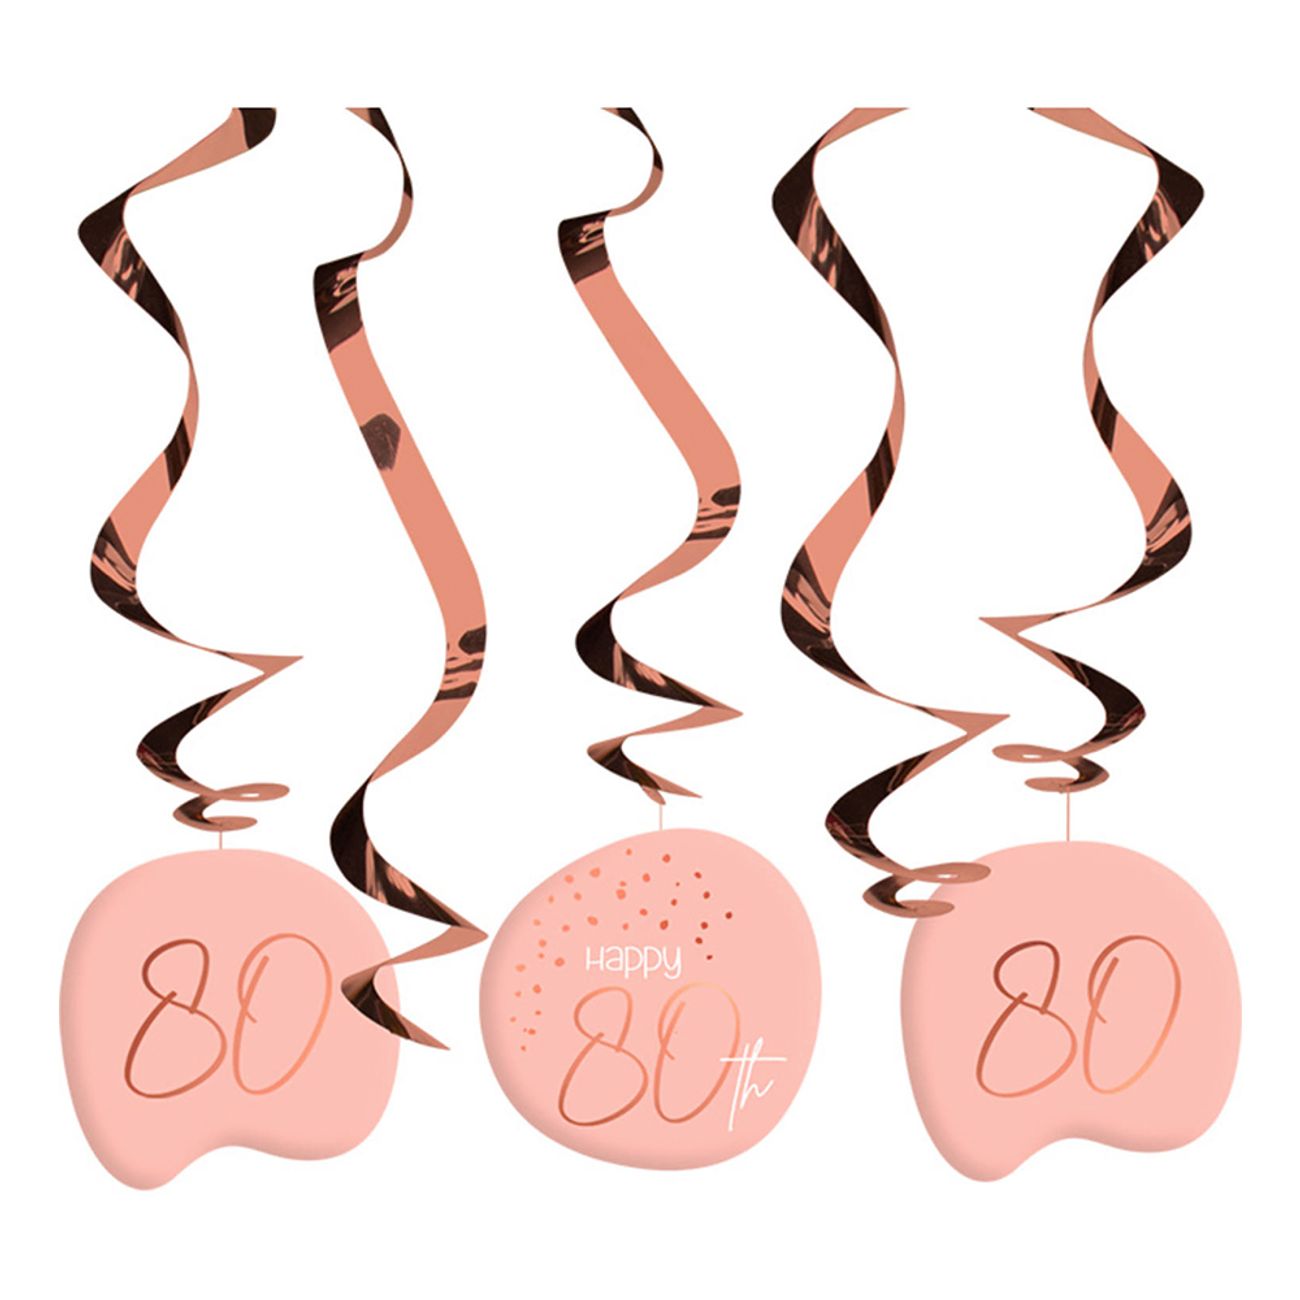 swirls-happy-80th-lush-blush-1